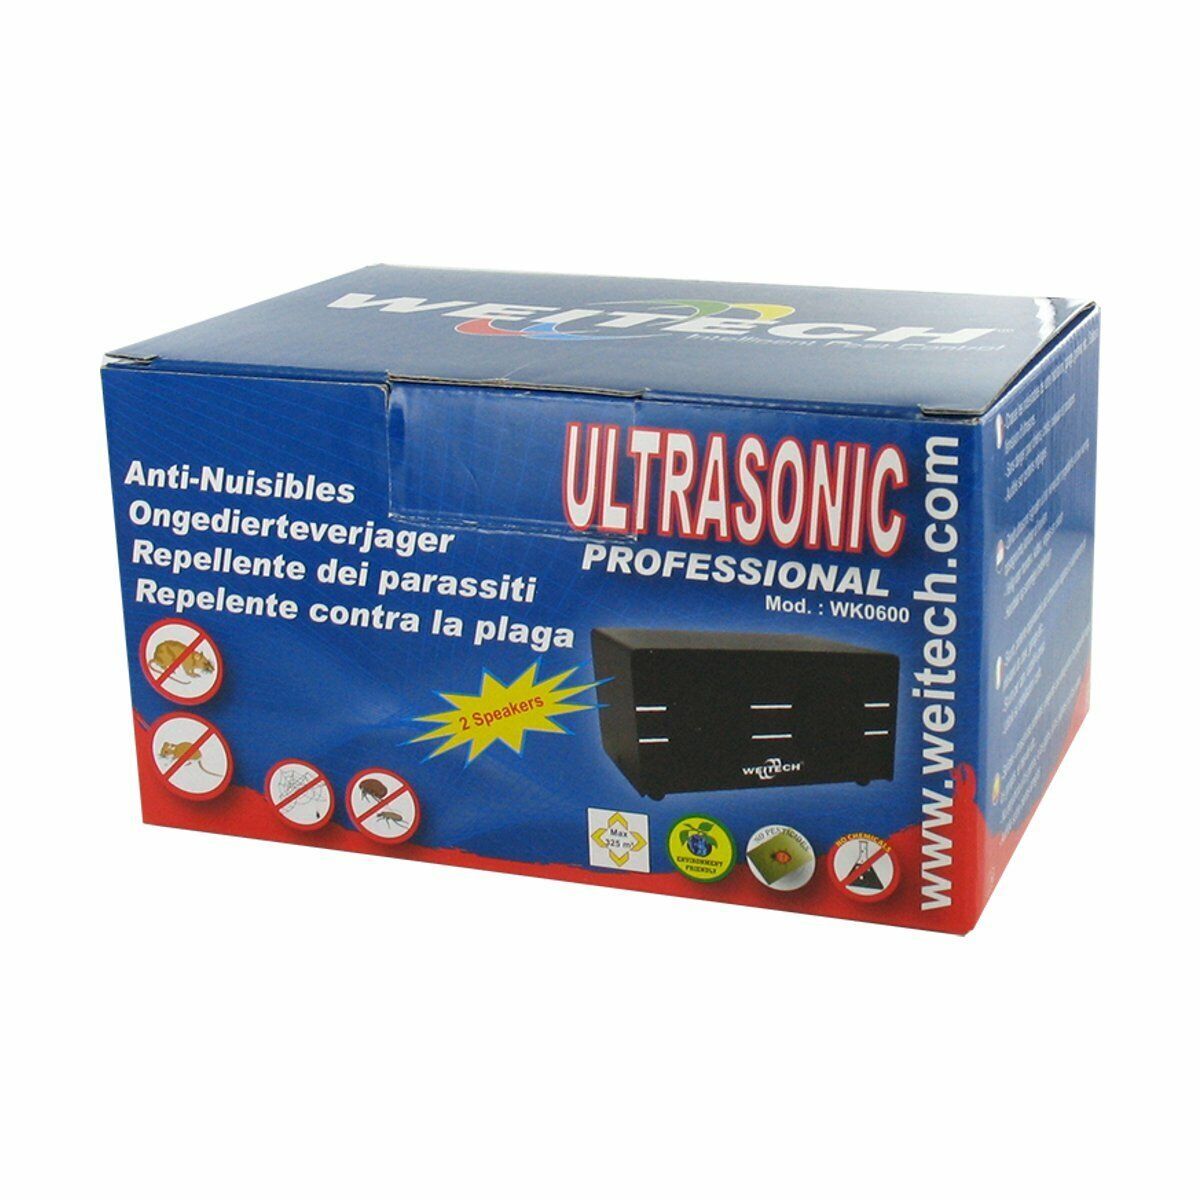 Ultrasonic anti nuisible 280M2.